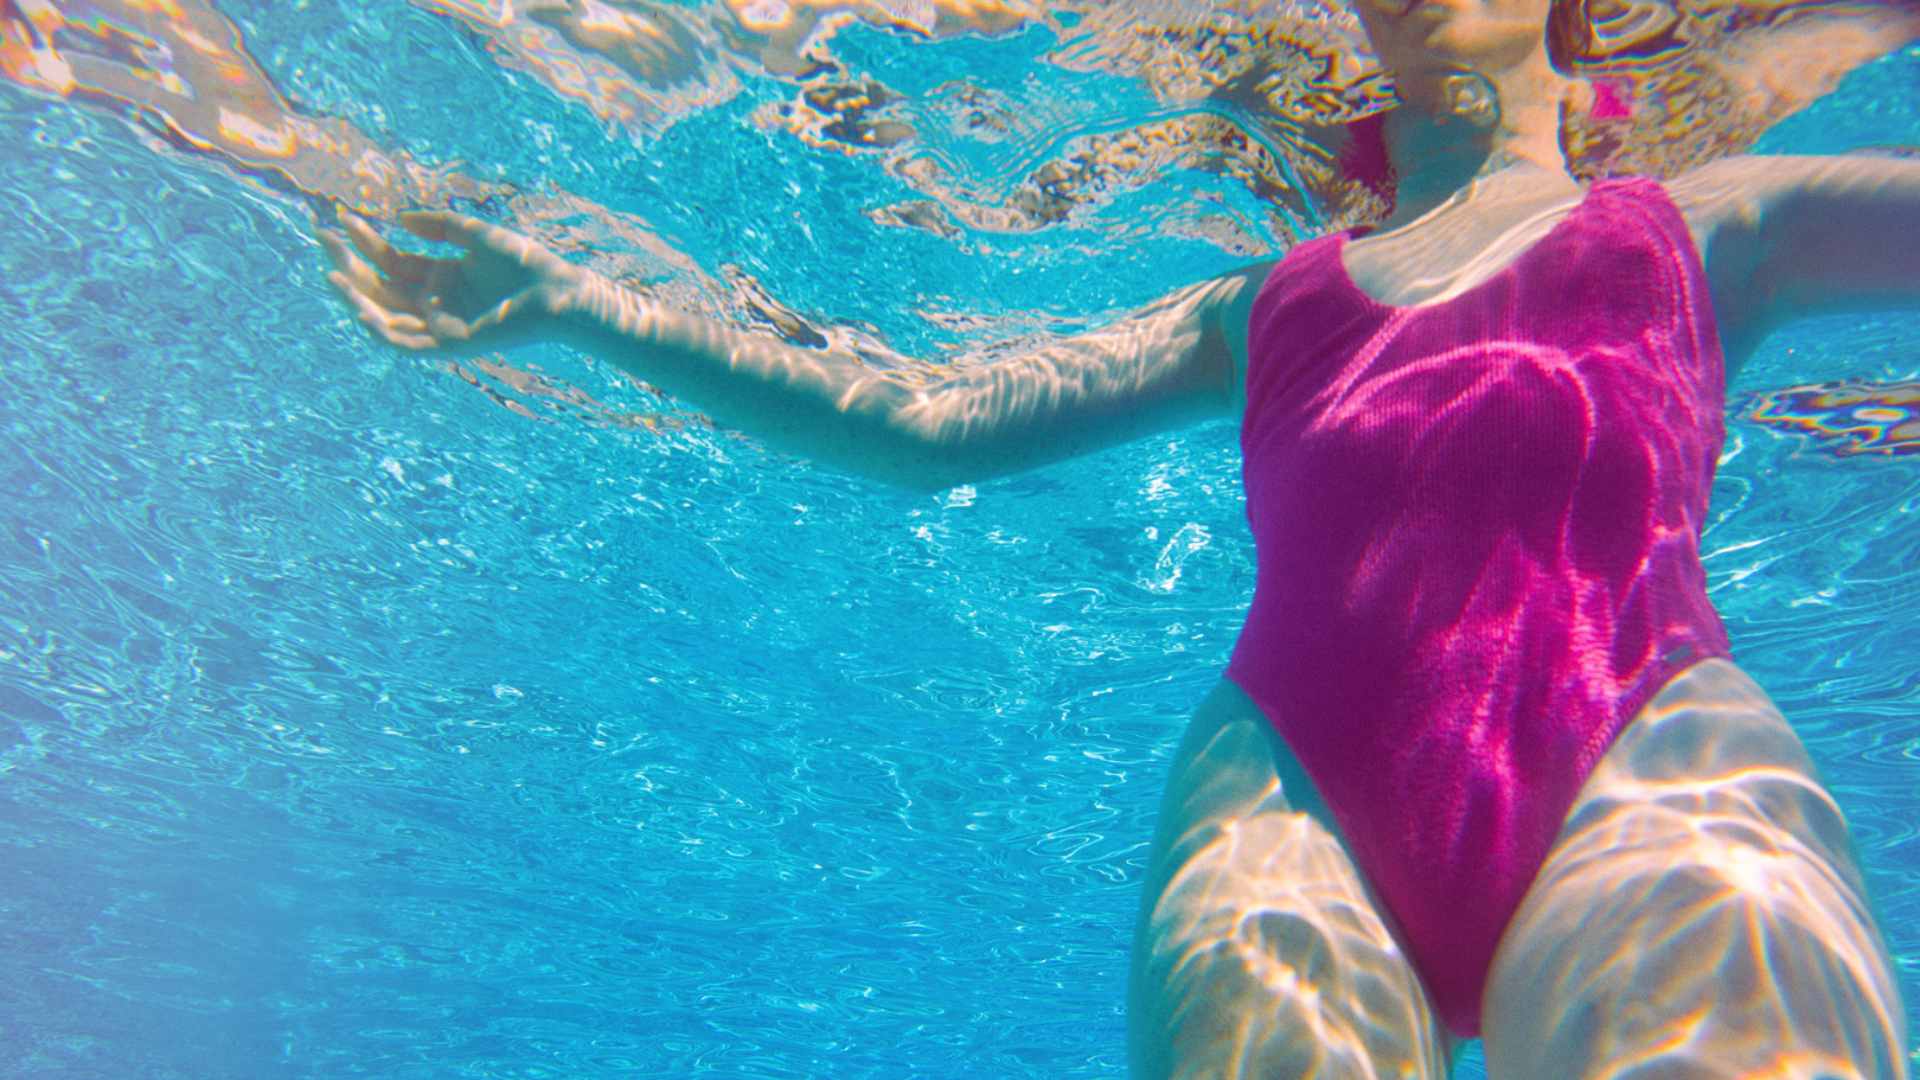 Woman in pink bathing suit underwater in a blue pool